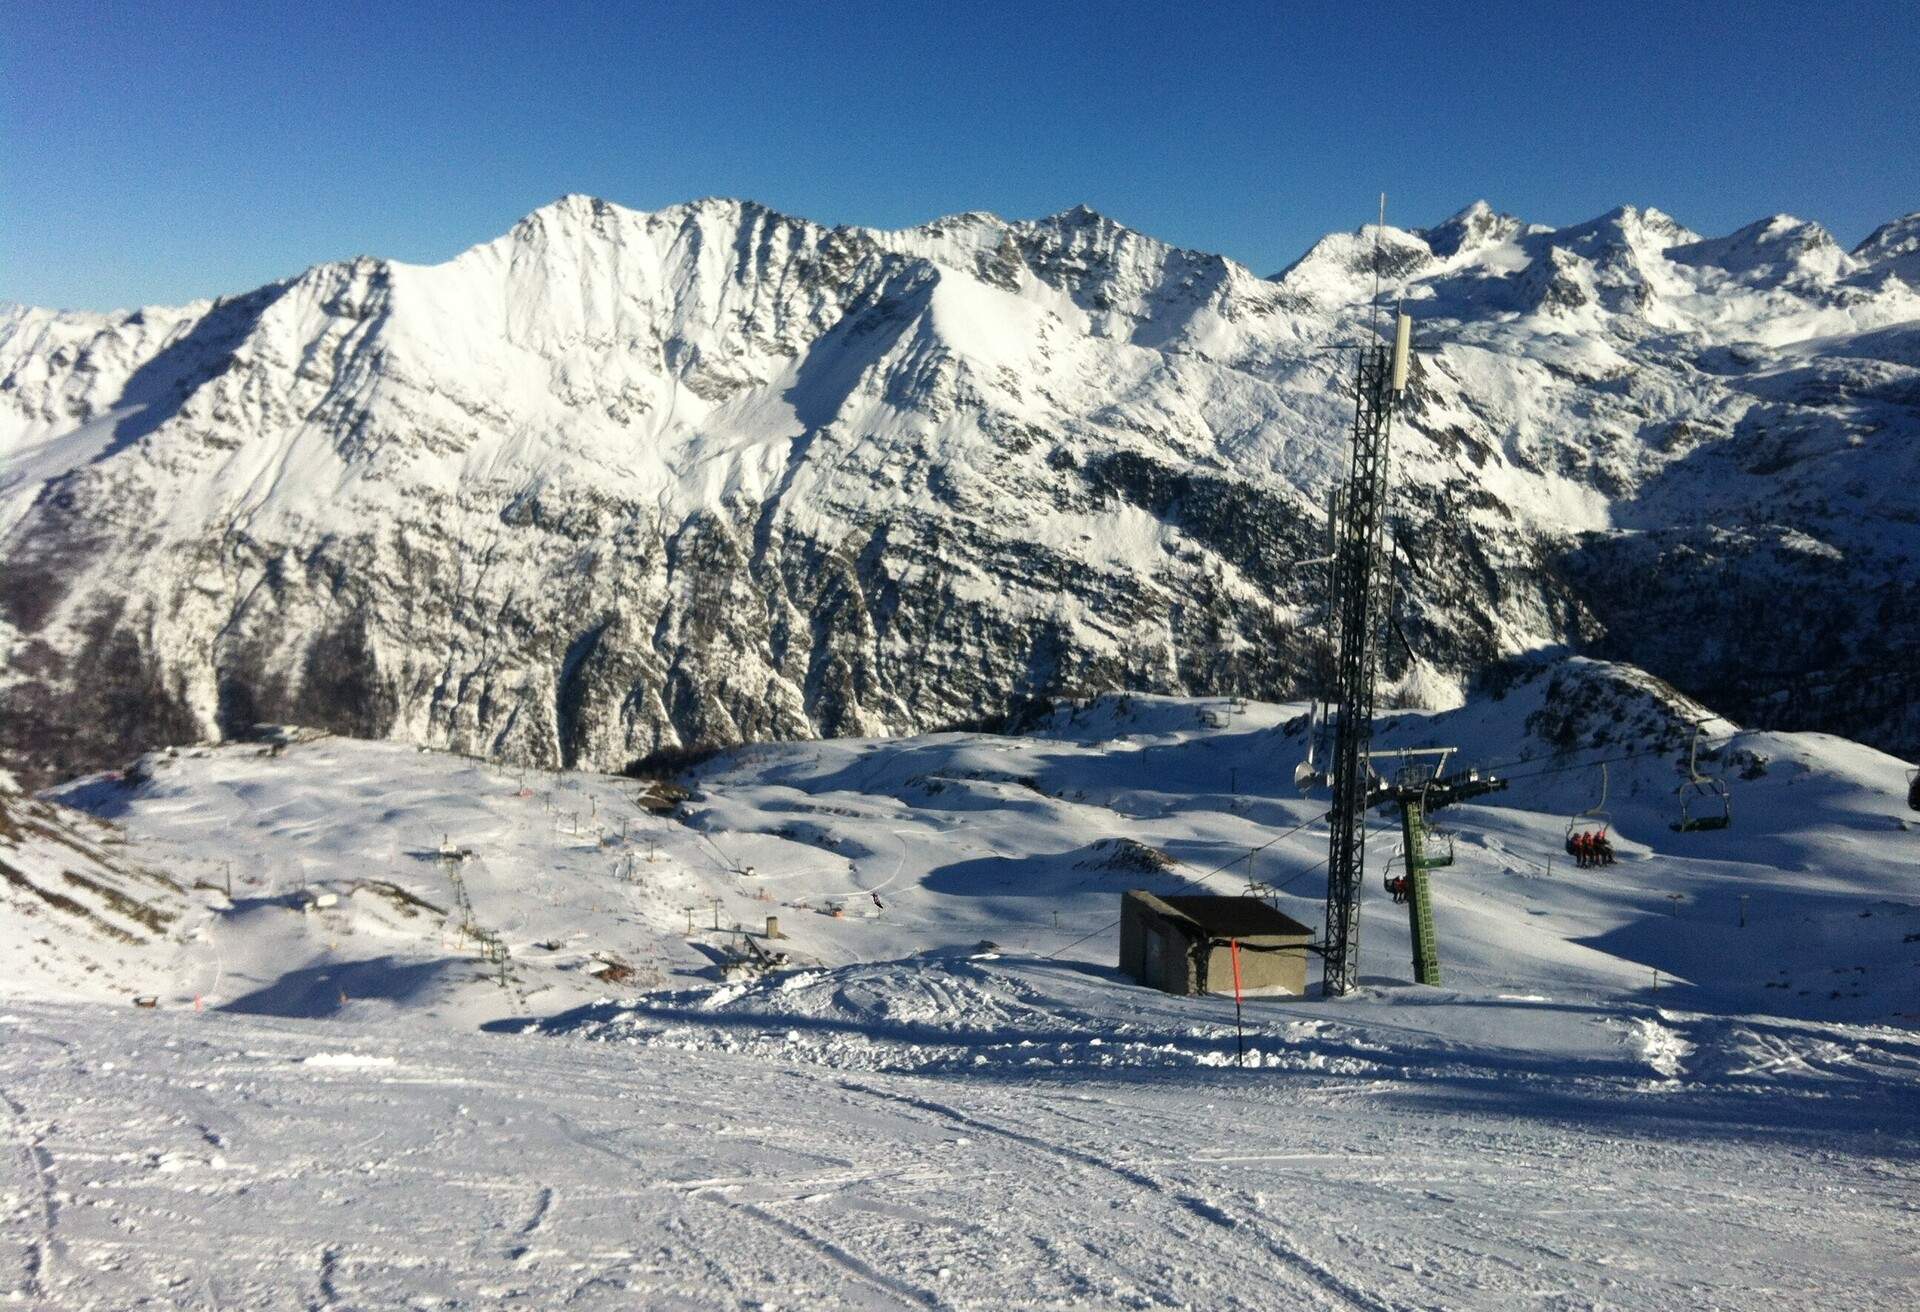 Ski area / LA ROSIÈRE - Montvalezan in Haute Savoie (France) near the Italian boundaries, in the Alps (San Bernardino Mountains); Shutterstock ID 681863446